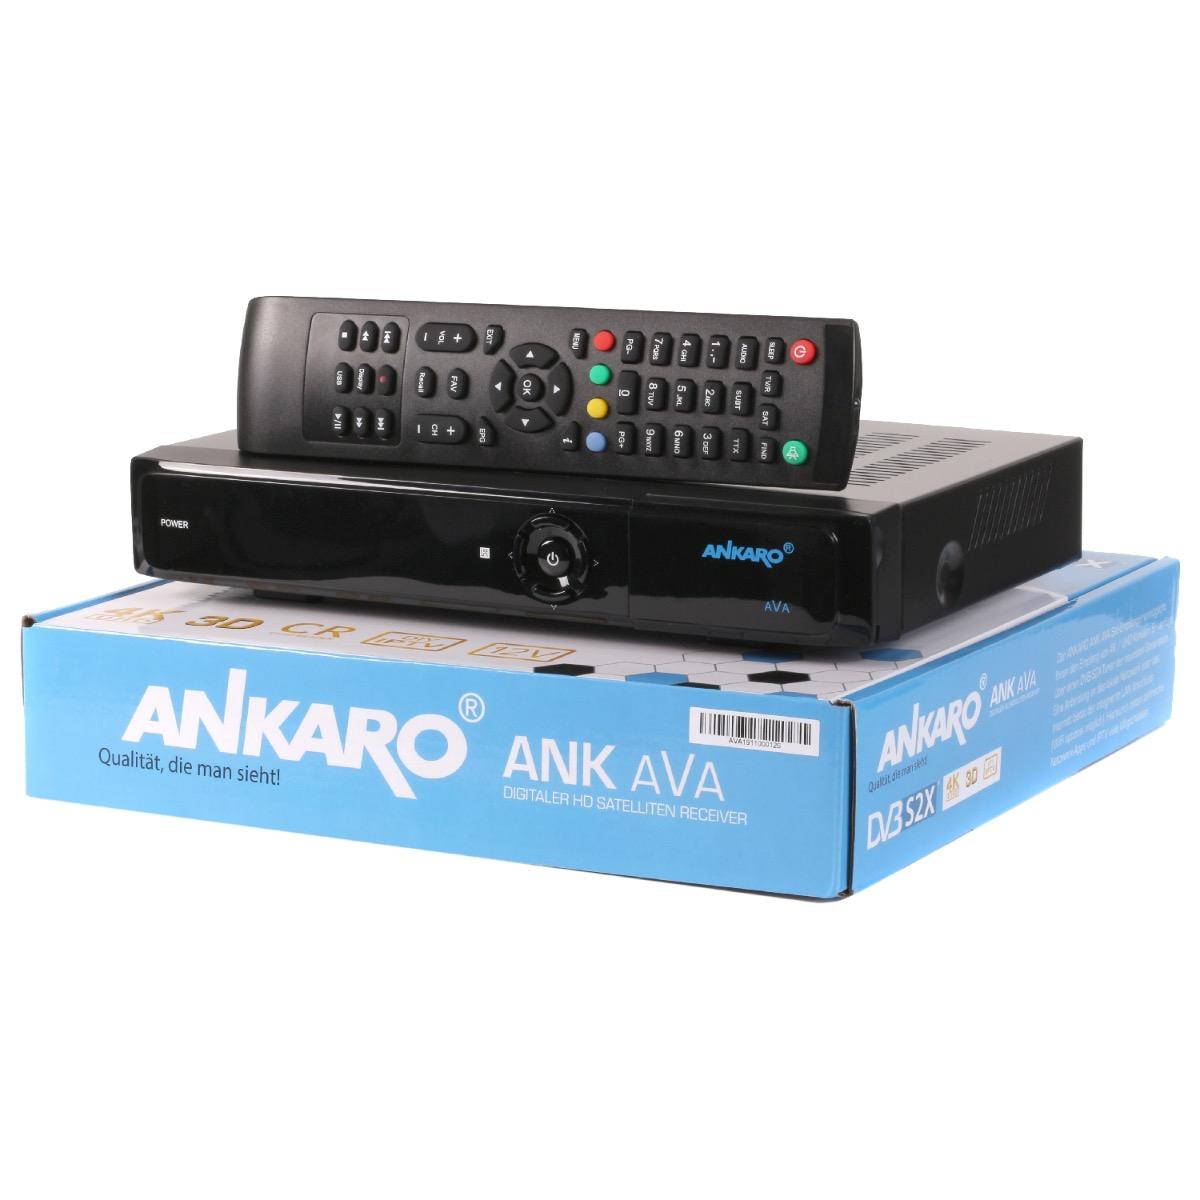 Receiver, (HDTV, Receiver IPTV H.265, mit aVA DVB-S2, DVB-S2 UHD, schwarz) 2160p, DVB-S2X, DVB-S, ANK Digitaler PVR, ANKARO Satelliten HD PVR-Funktion, 4K,